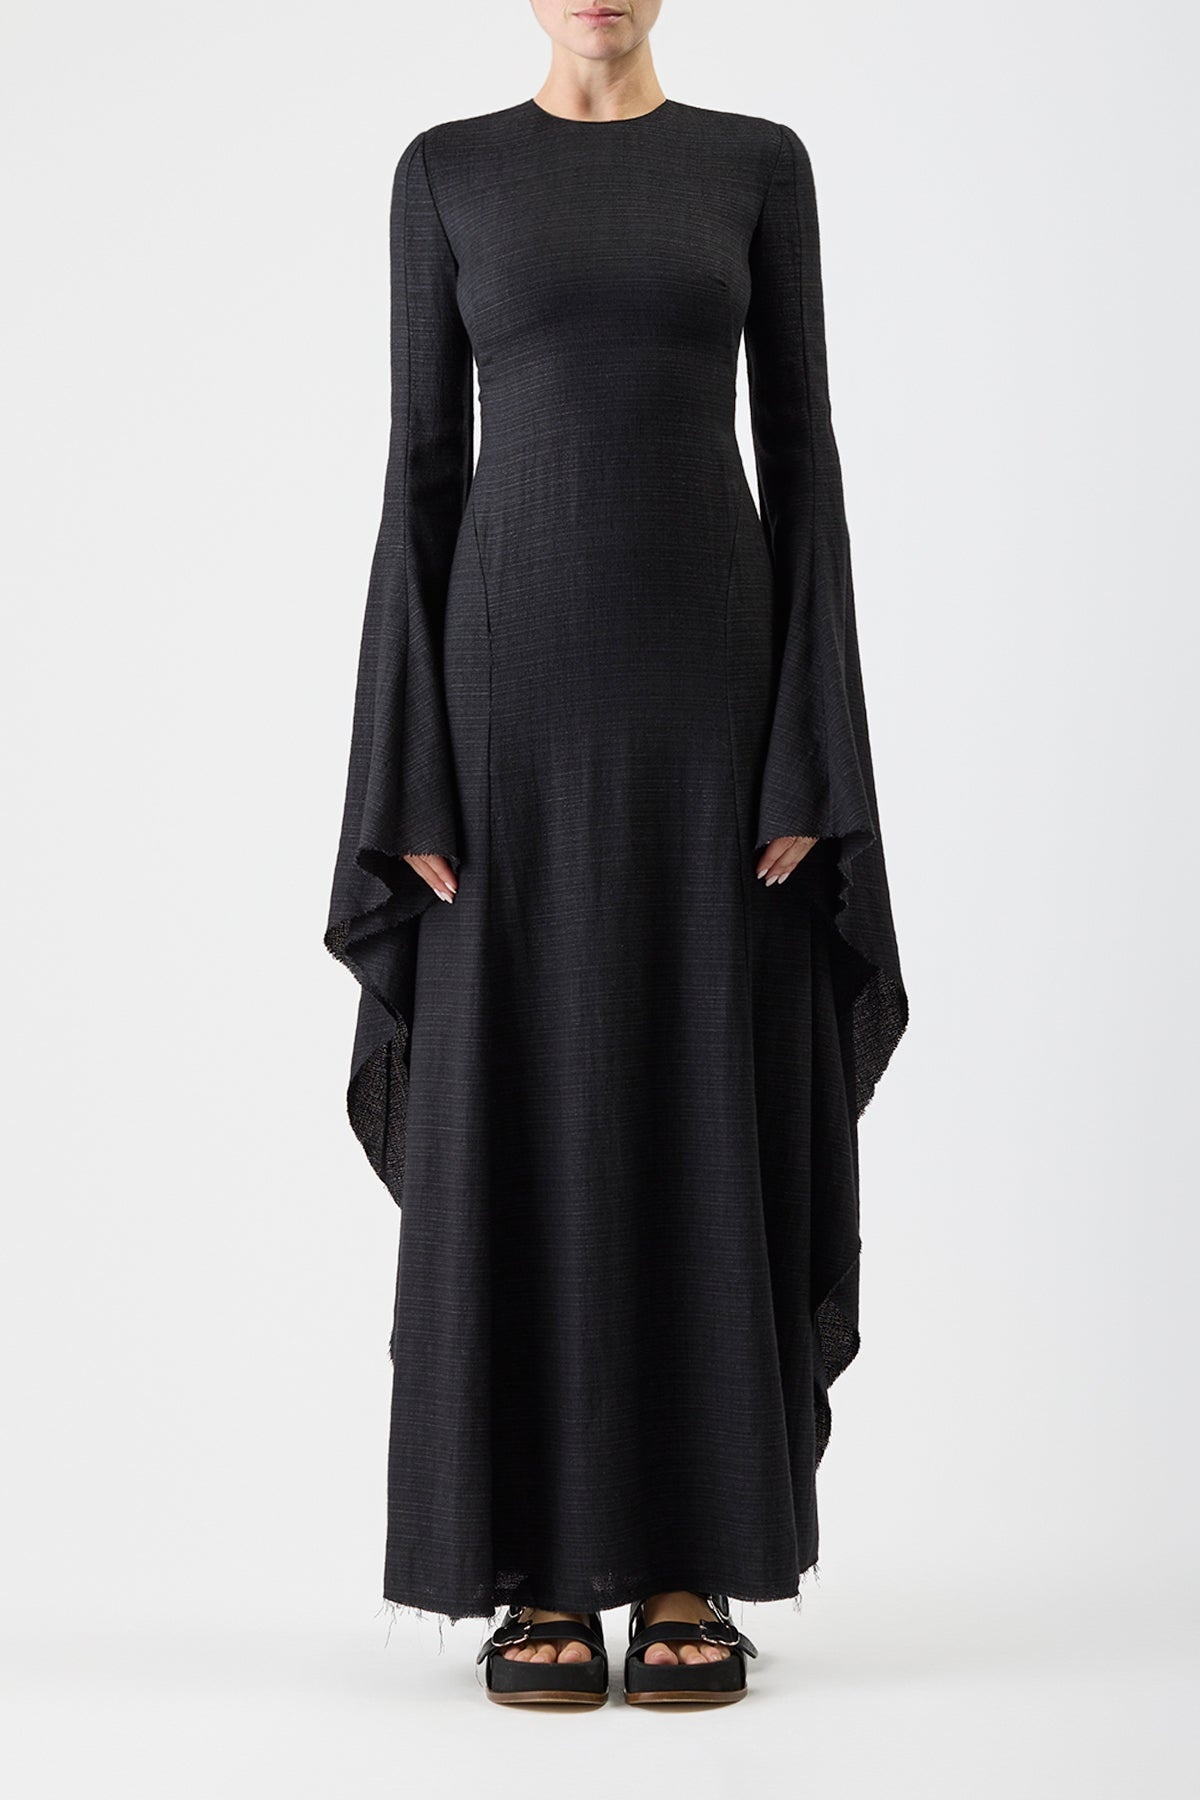 Sigrud Draped Dress in Silk Wool Gauze - 3